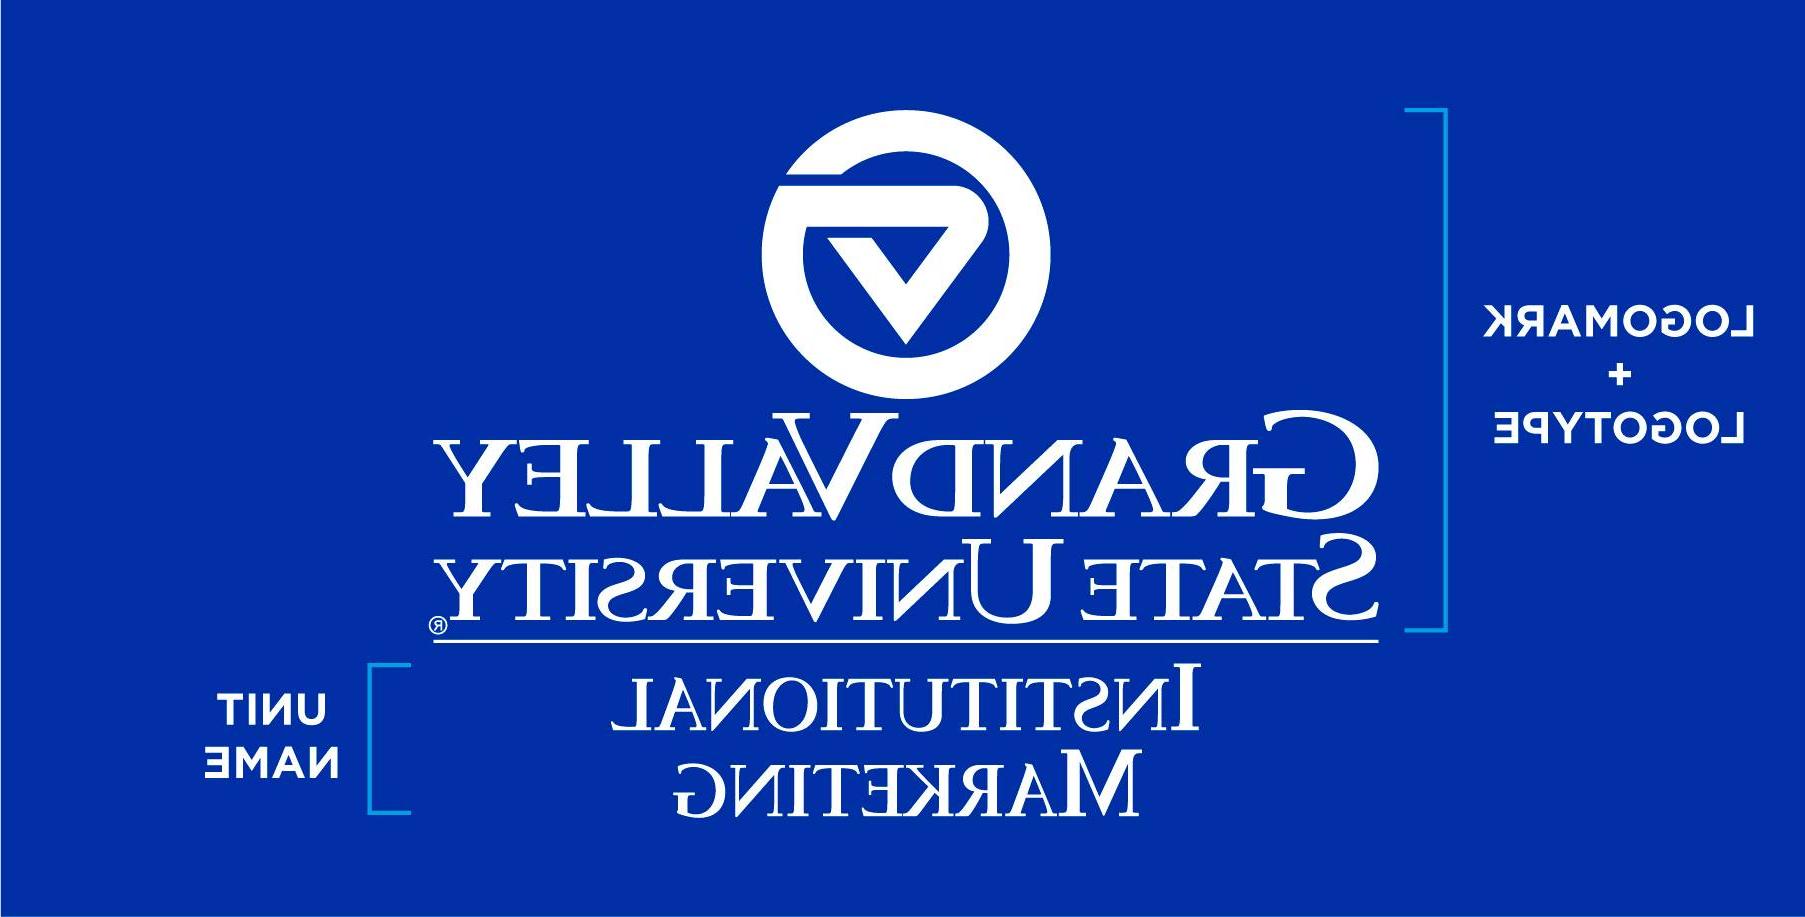 University Marketing combination logo